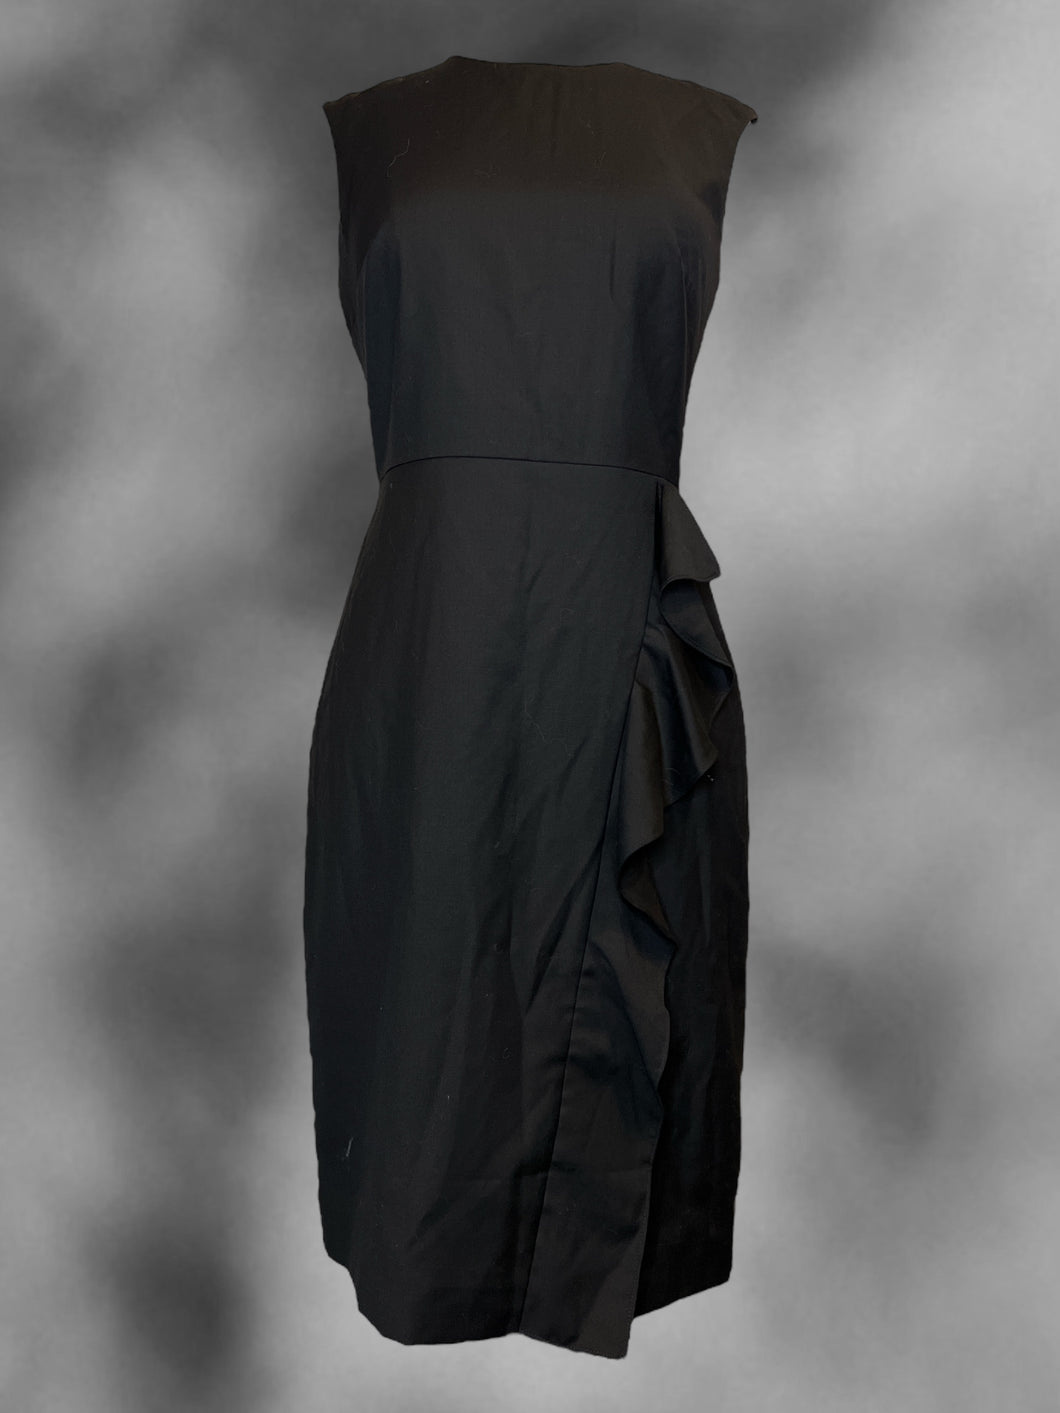 M Black sleeveless round neckline bodycon dress w/ ruffle detail, back hem slit, & clasp/zipper closure